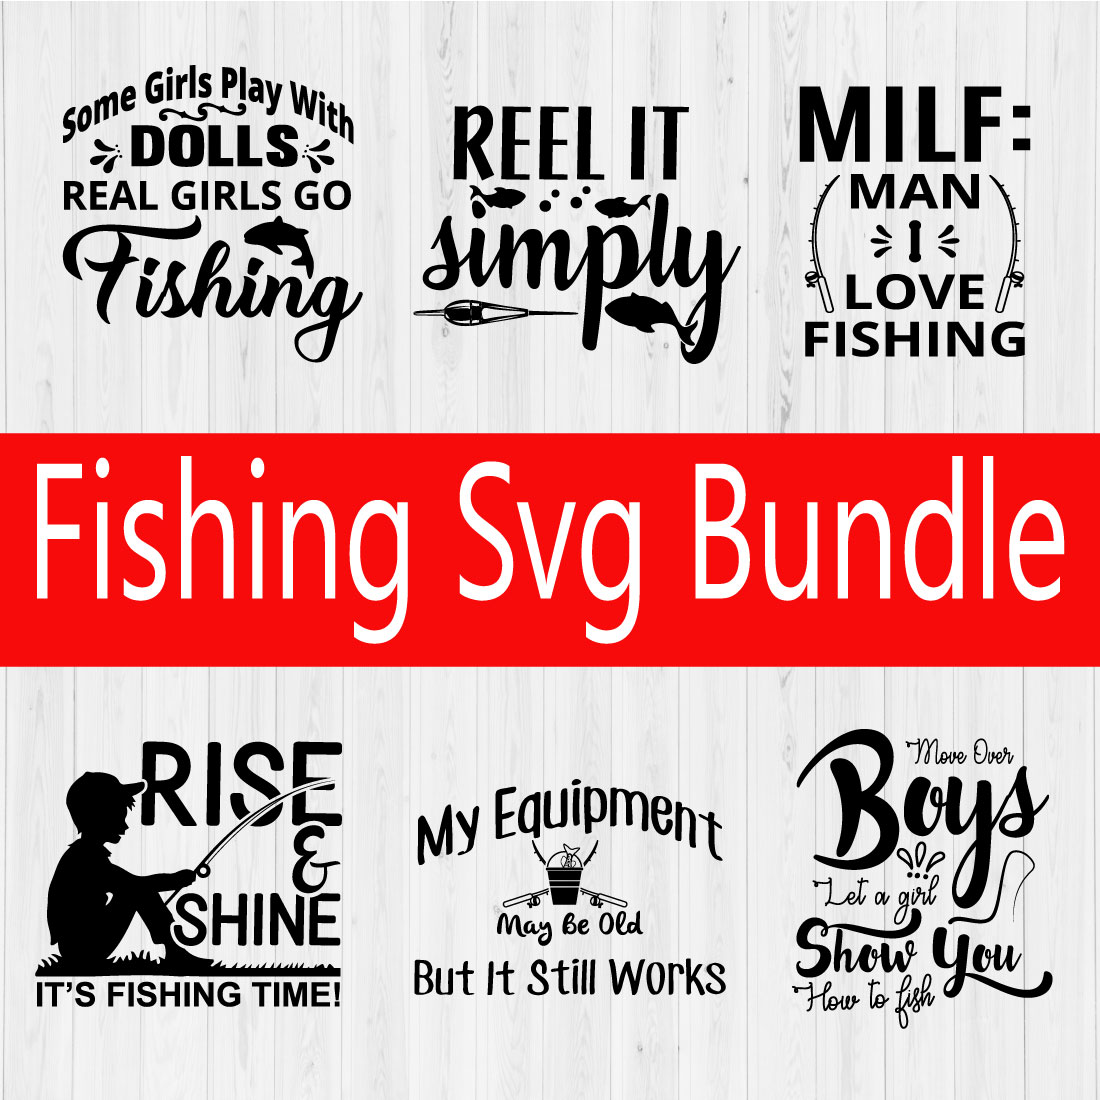 Fishing Svg Bundle Vol12 cover image.